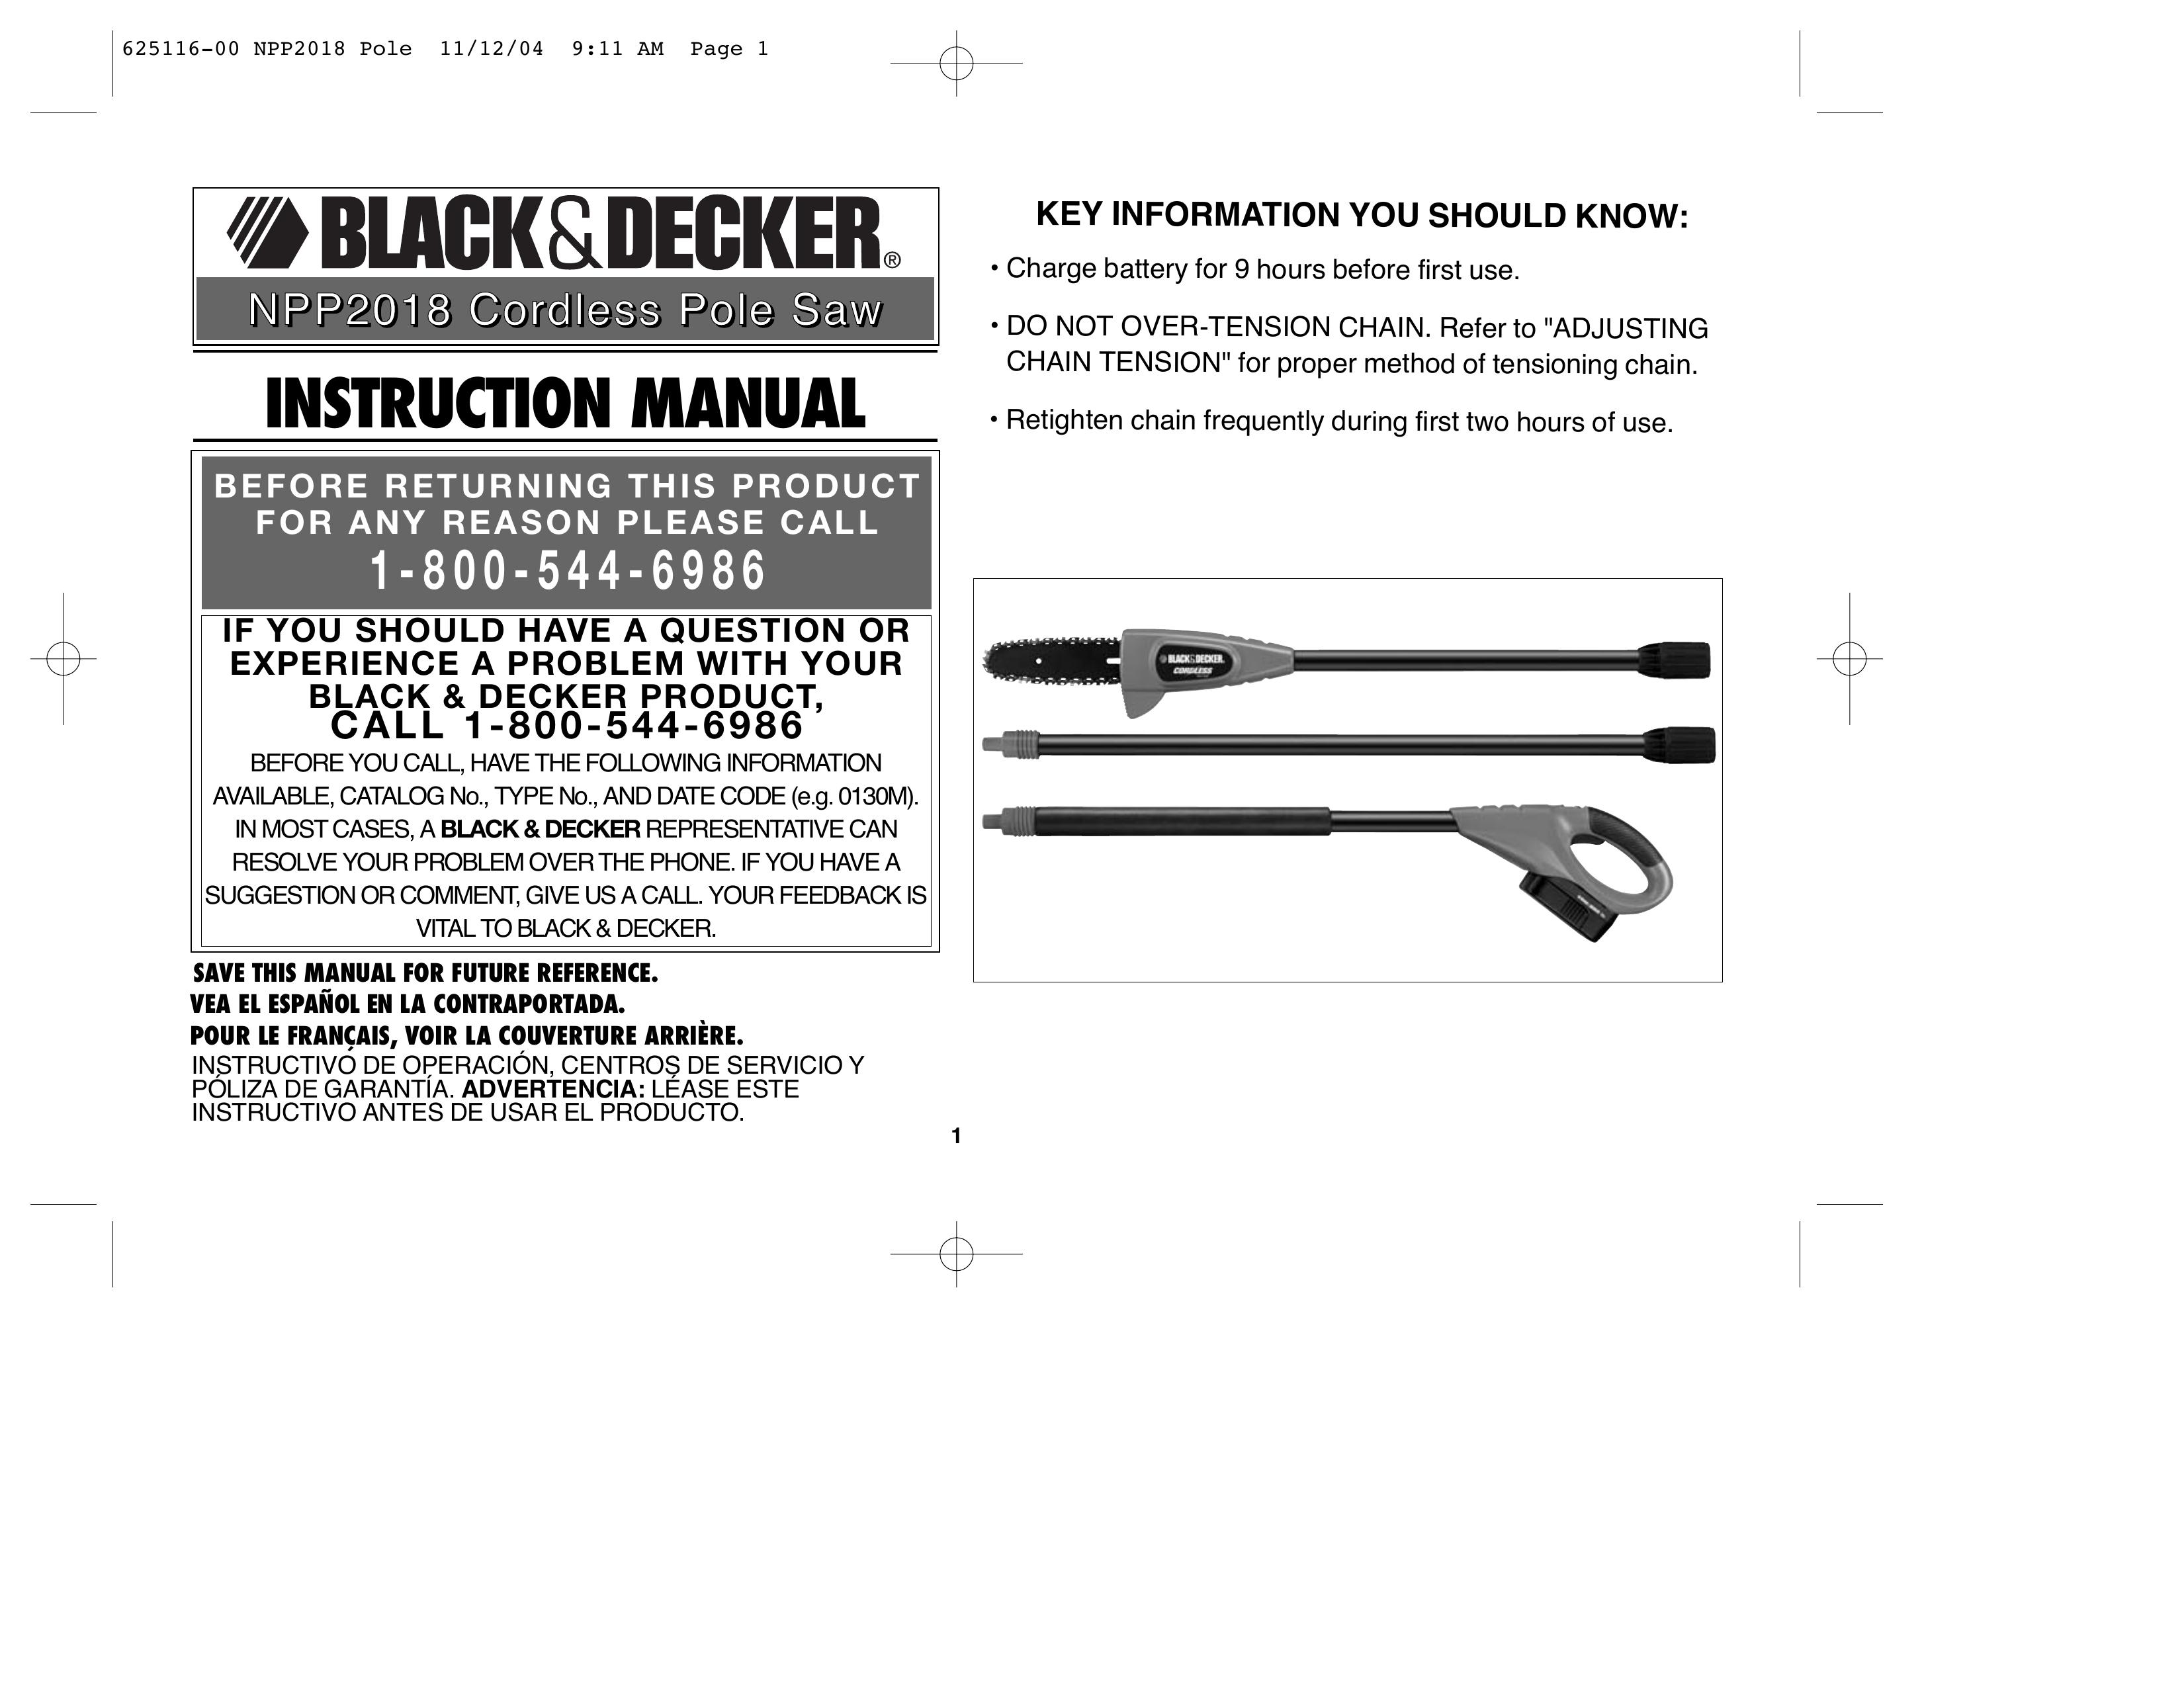 Black & Decker NPP2018R Pole Saw User Manual